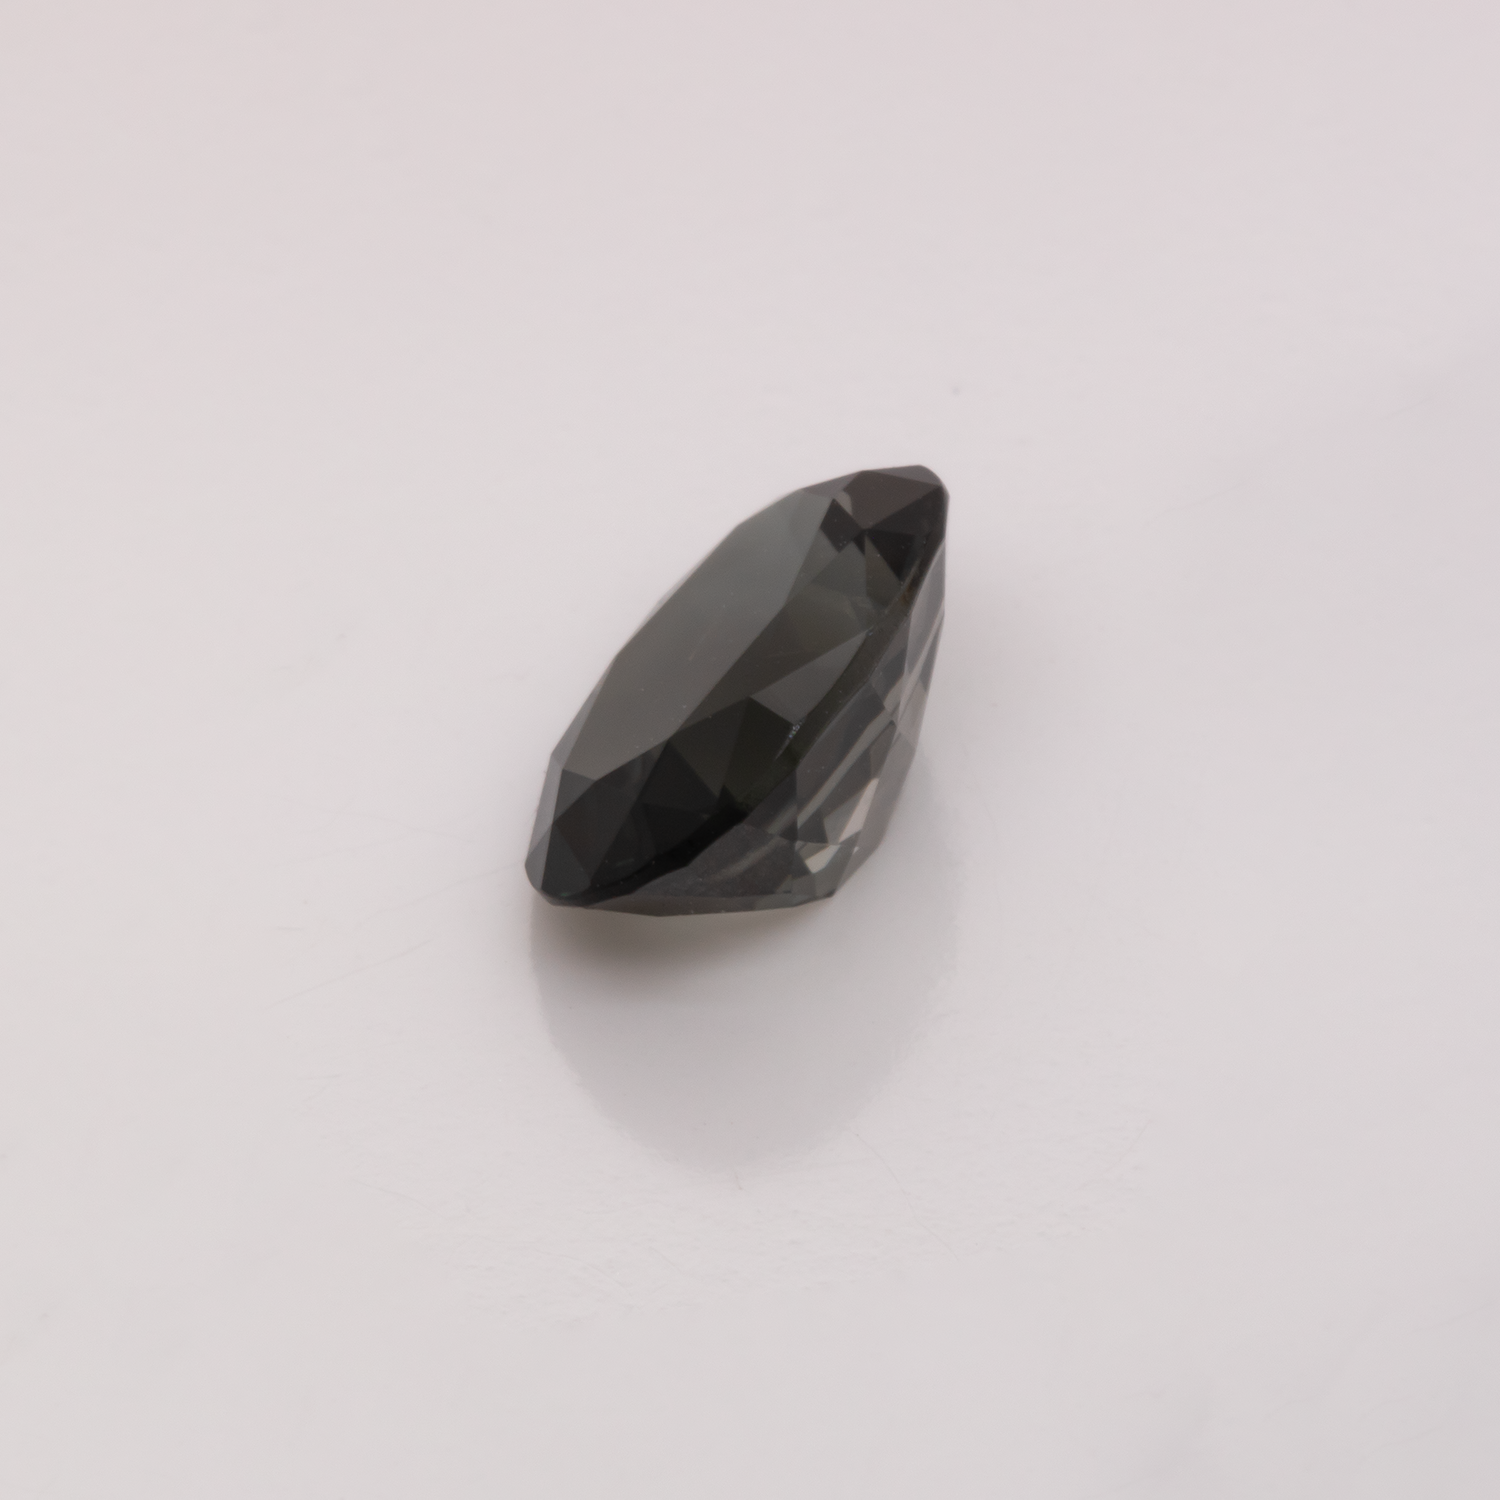 Tourmaline - grey, oval, 11x8 mm, 3.02 cts, No. TR10218